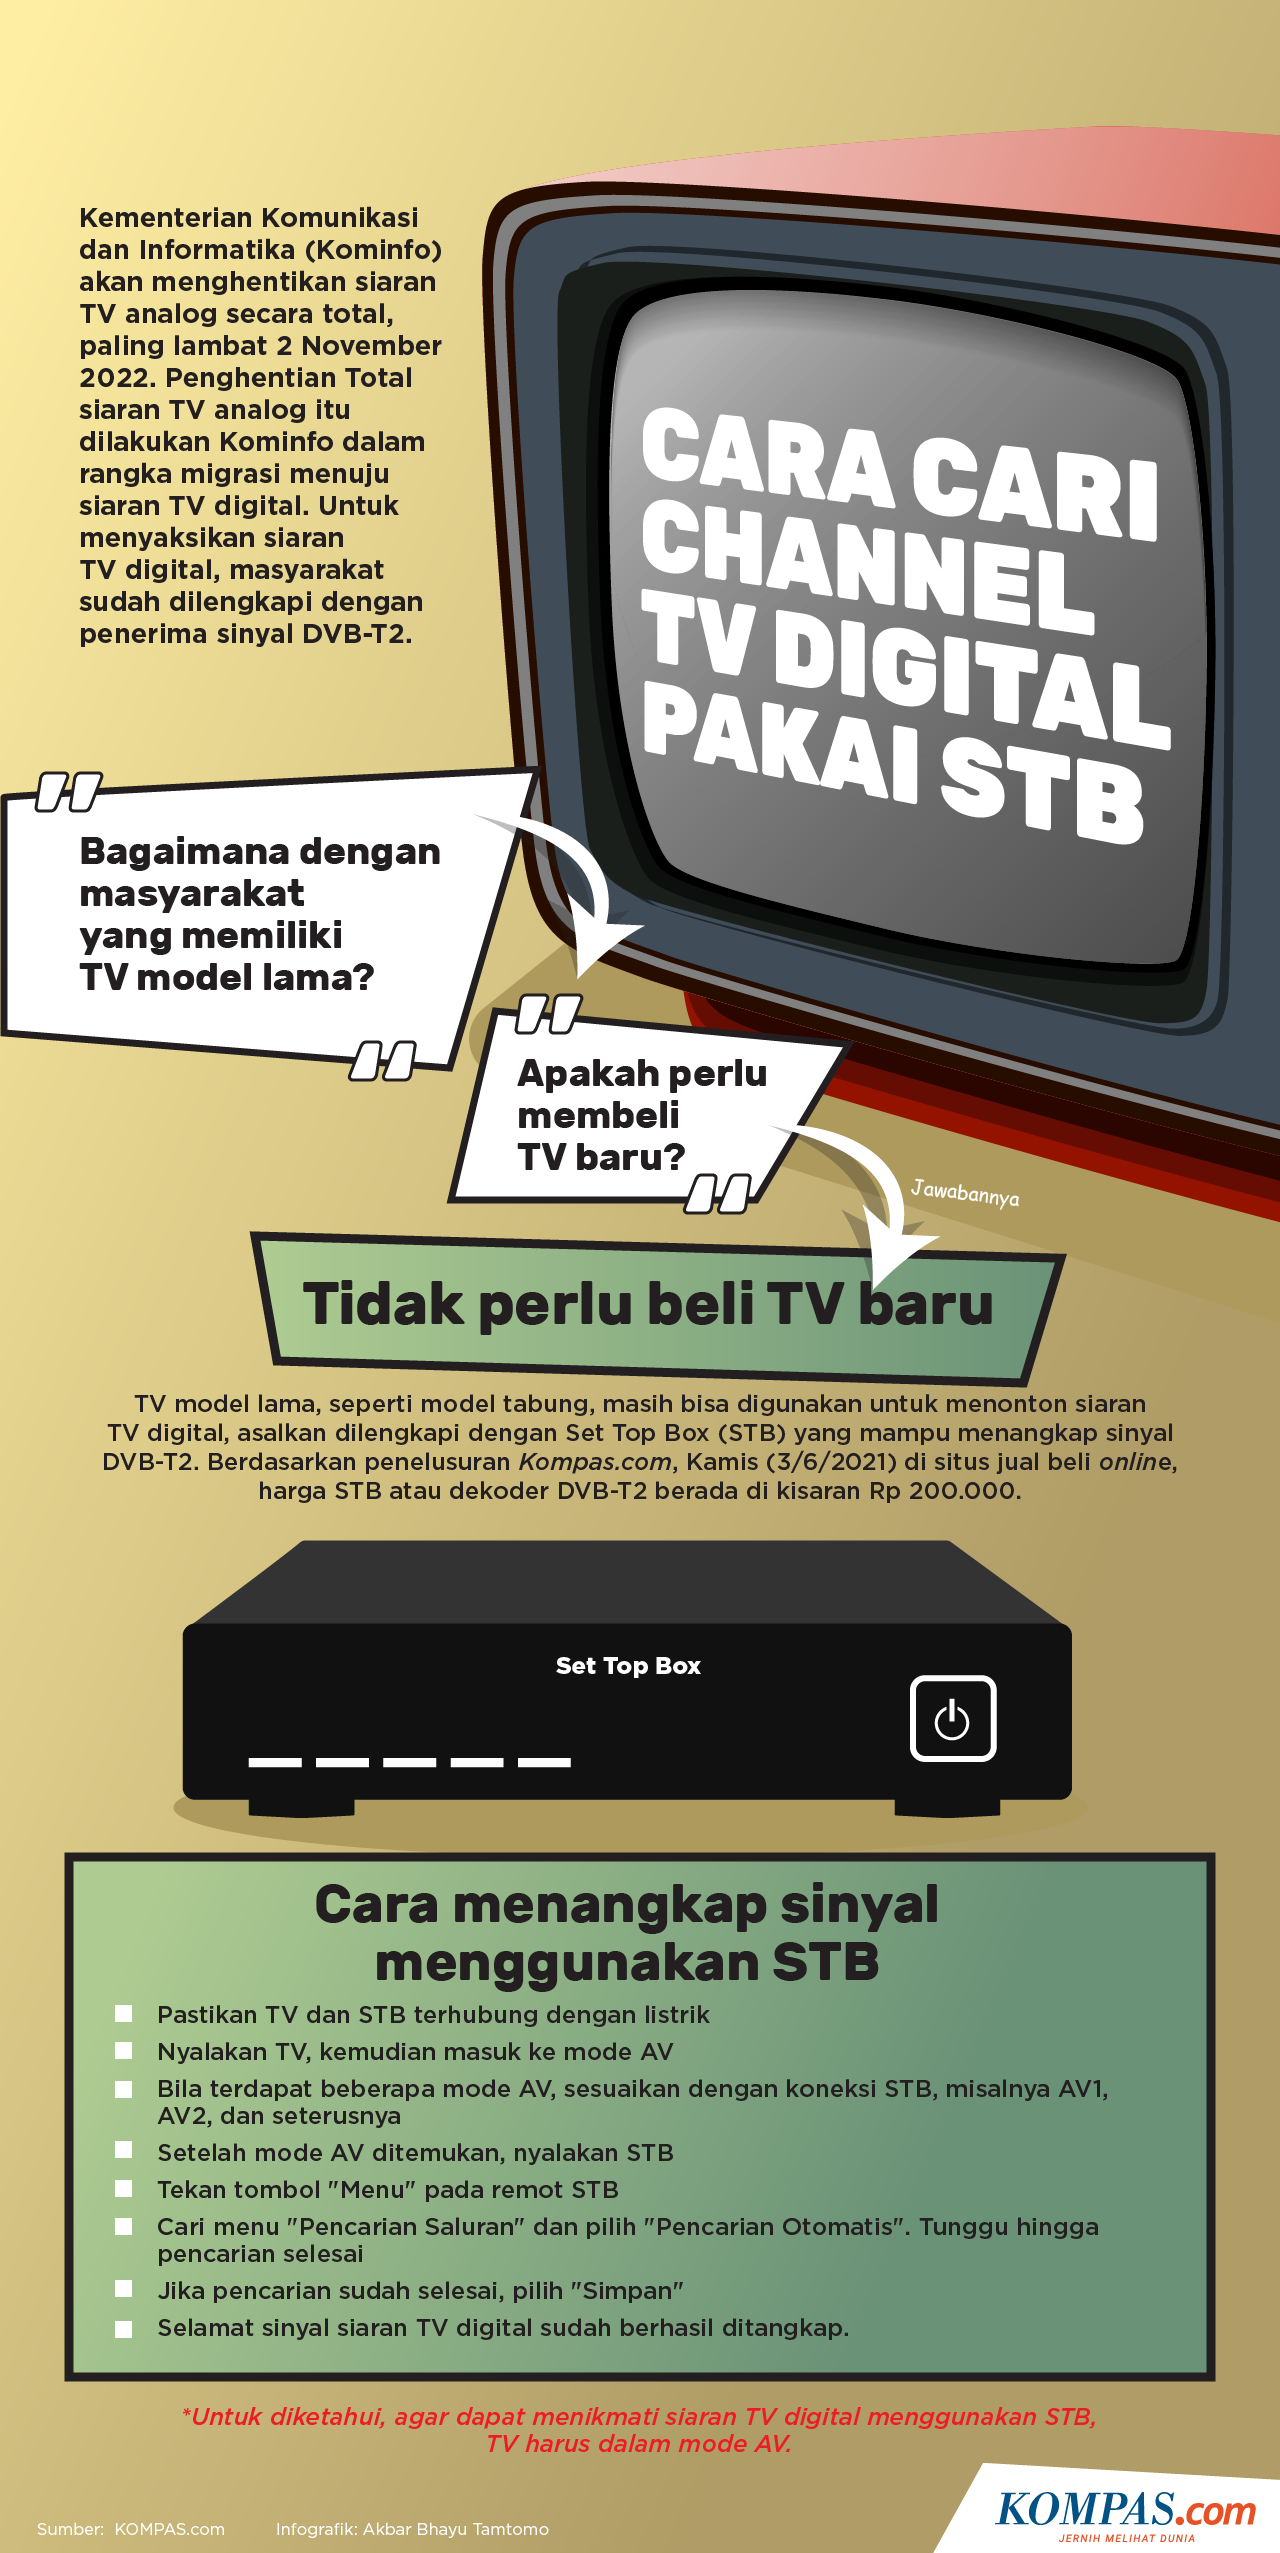 Box digital tv up set Cara Mengubah